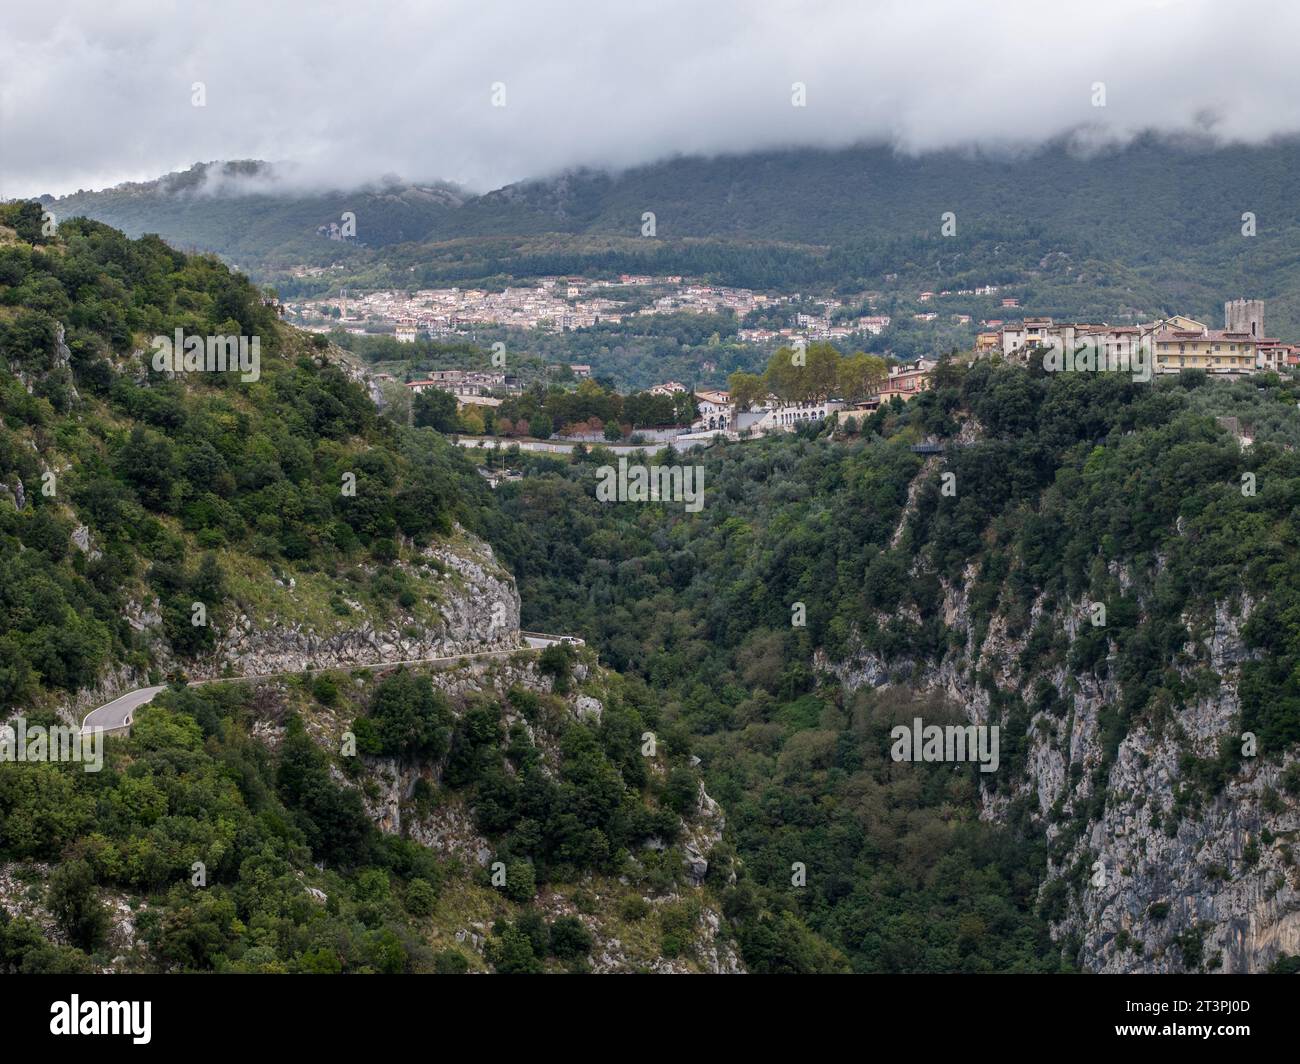 Aerial view of via muro rotto matese region of Campania italy Stock Photo